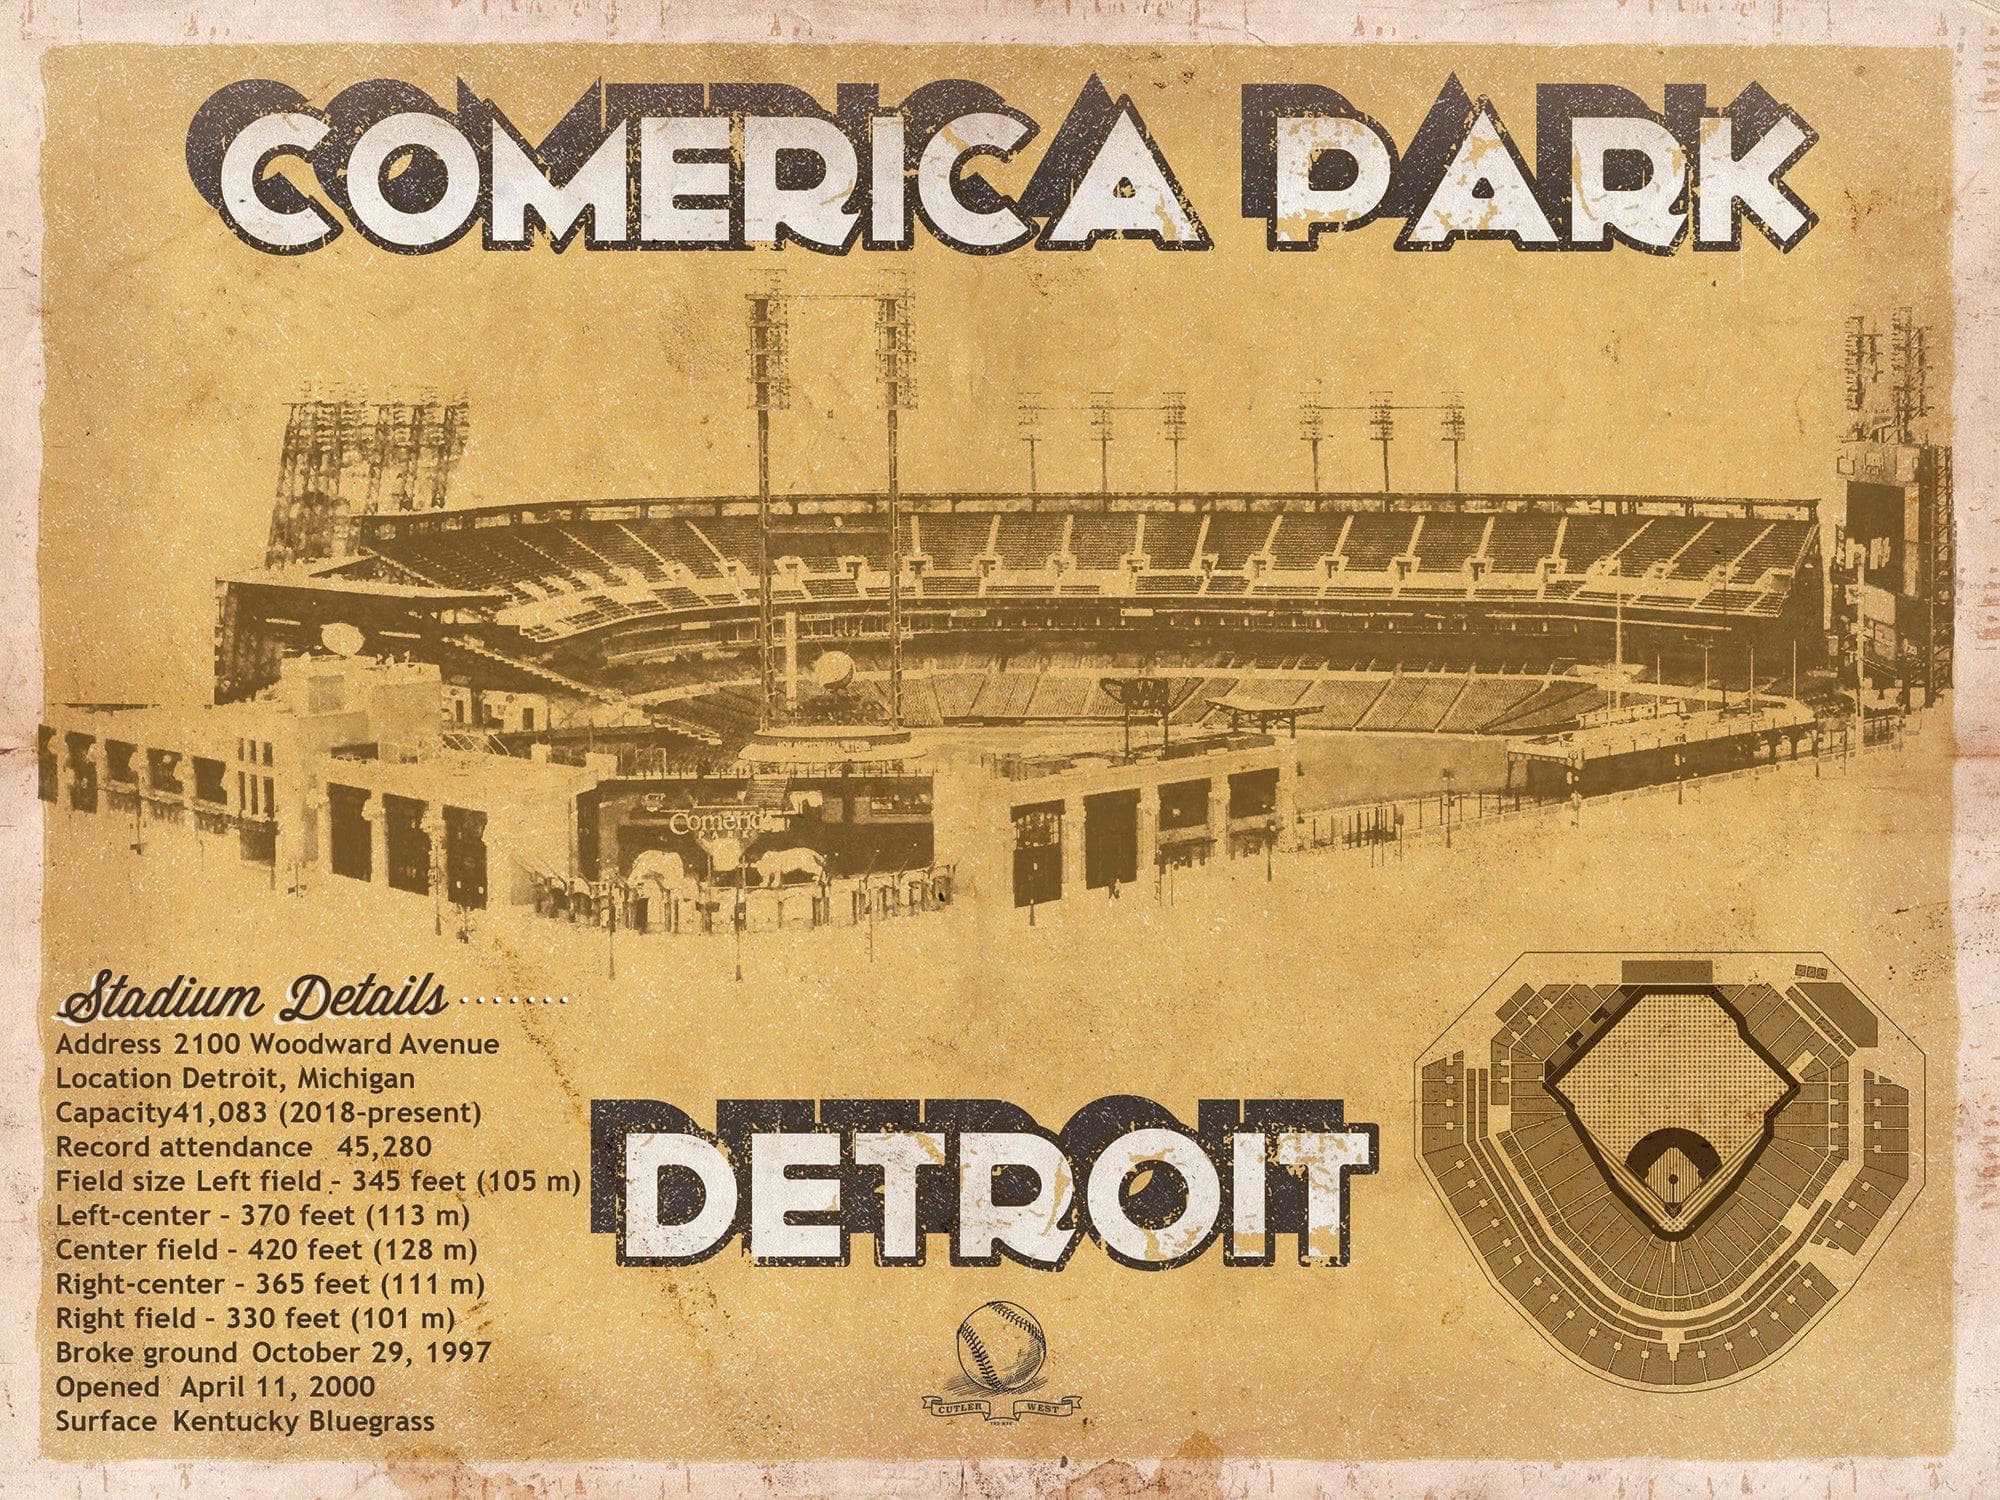 Cutler West Baseball Collection 14" x 11" / Unframed Vintage Detroit Tigers Comerica Park Baseball Print 705008312-14"-x-11"54413